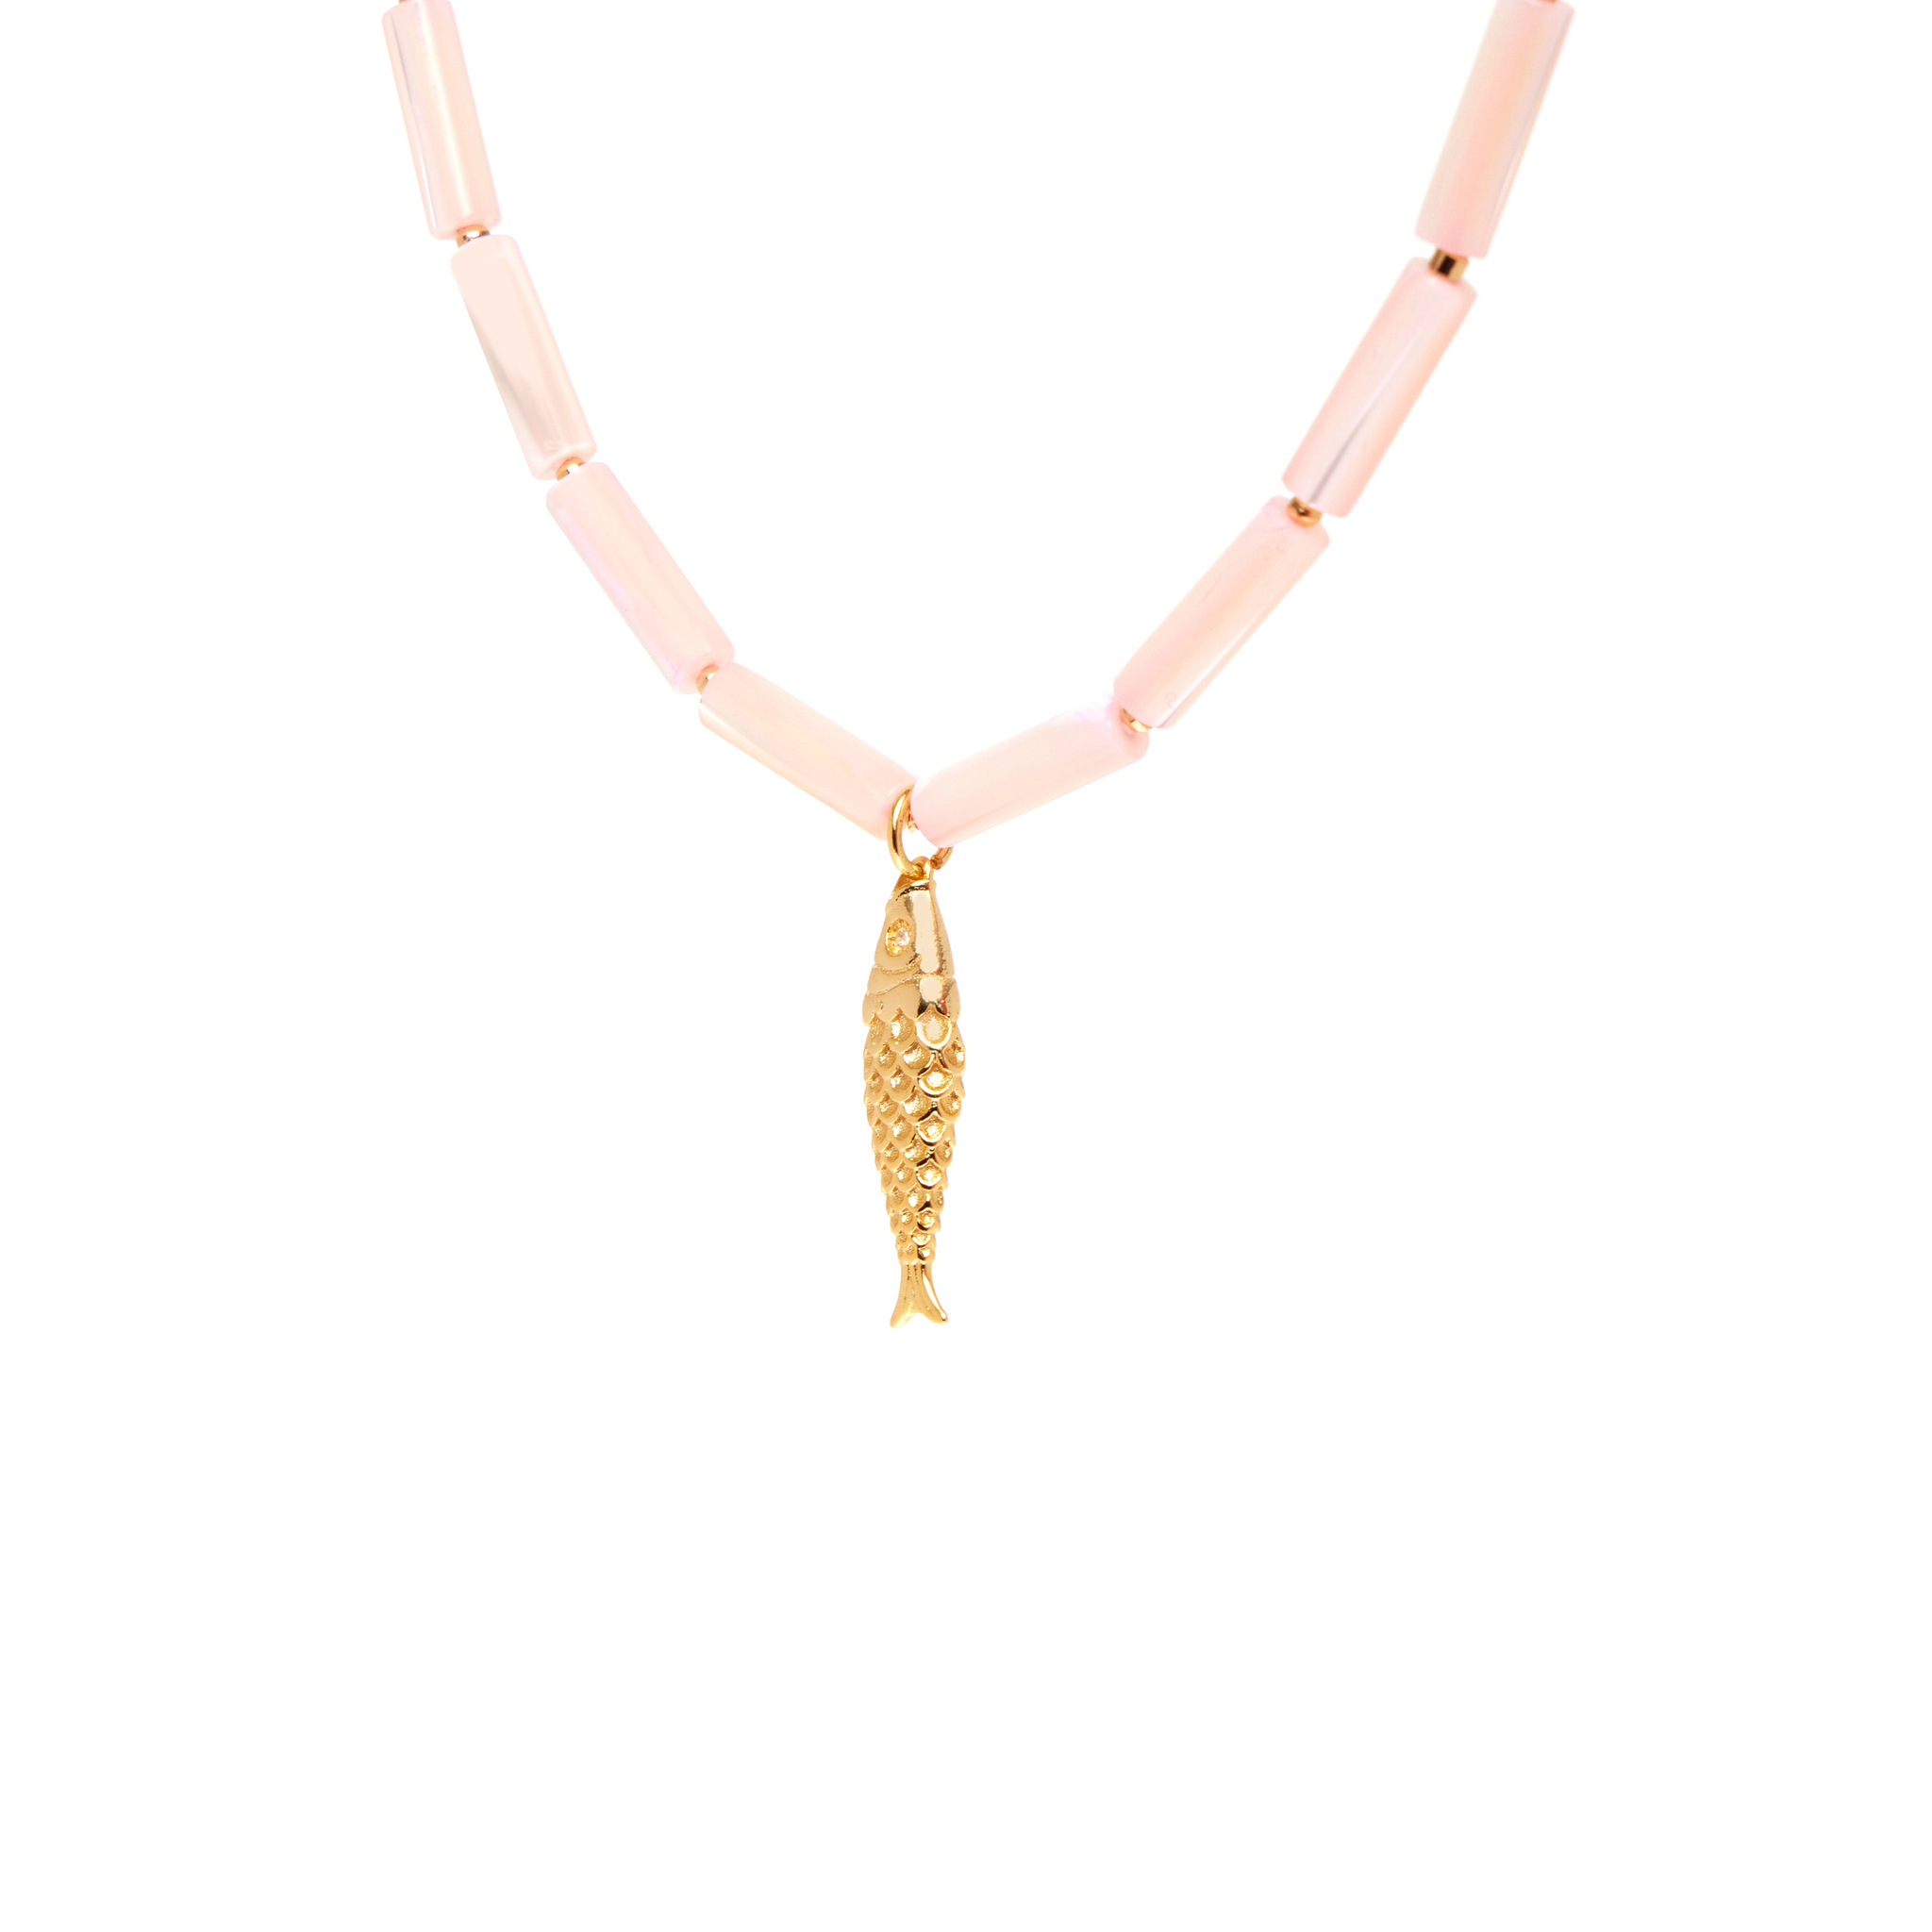 HOLLY JUNE Колье Gold Fish Tube Necklace - Pink колье holly june gold saturn necklace 1 шт